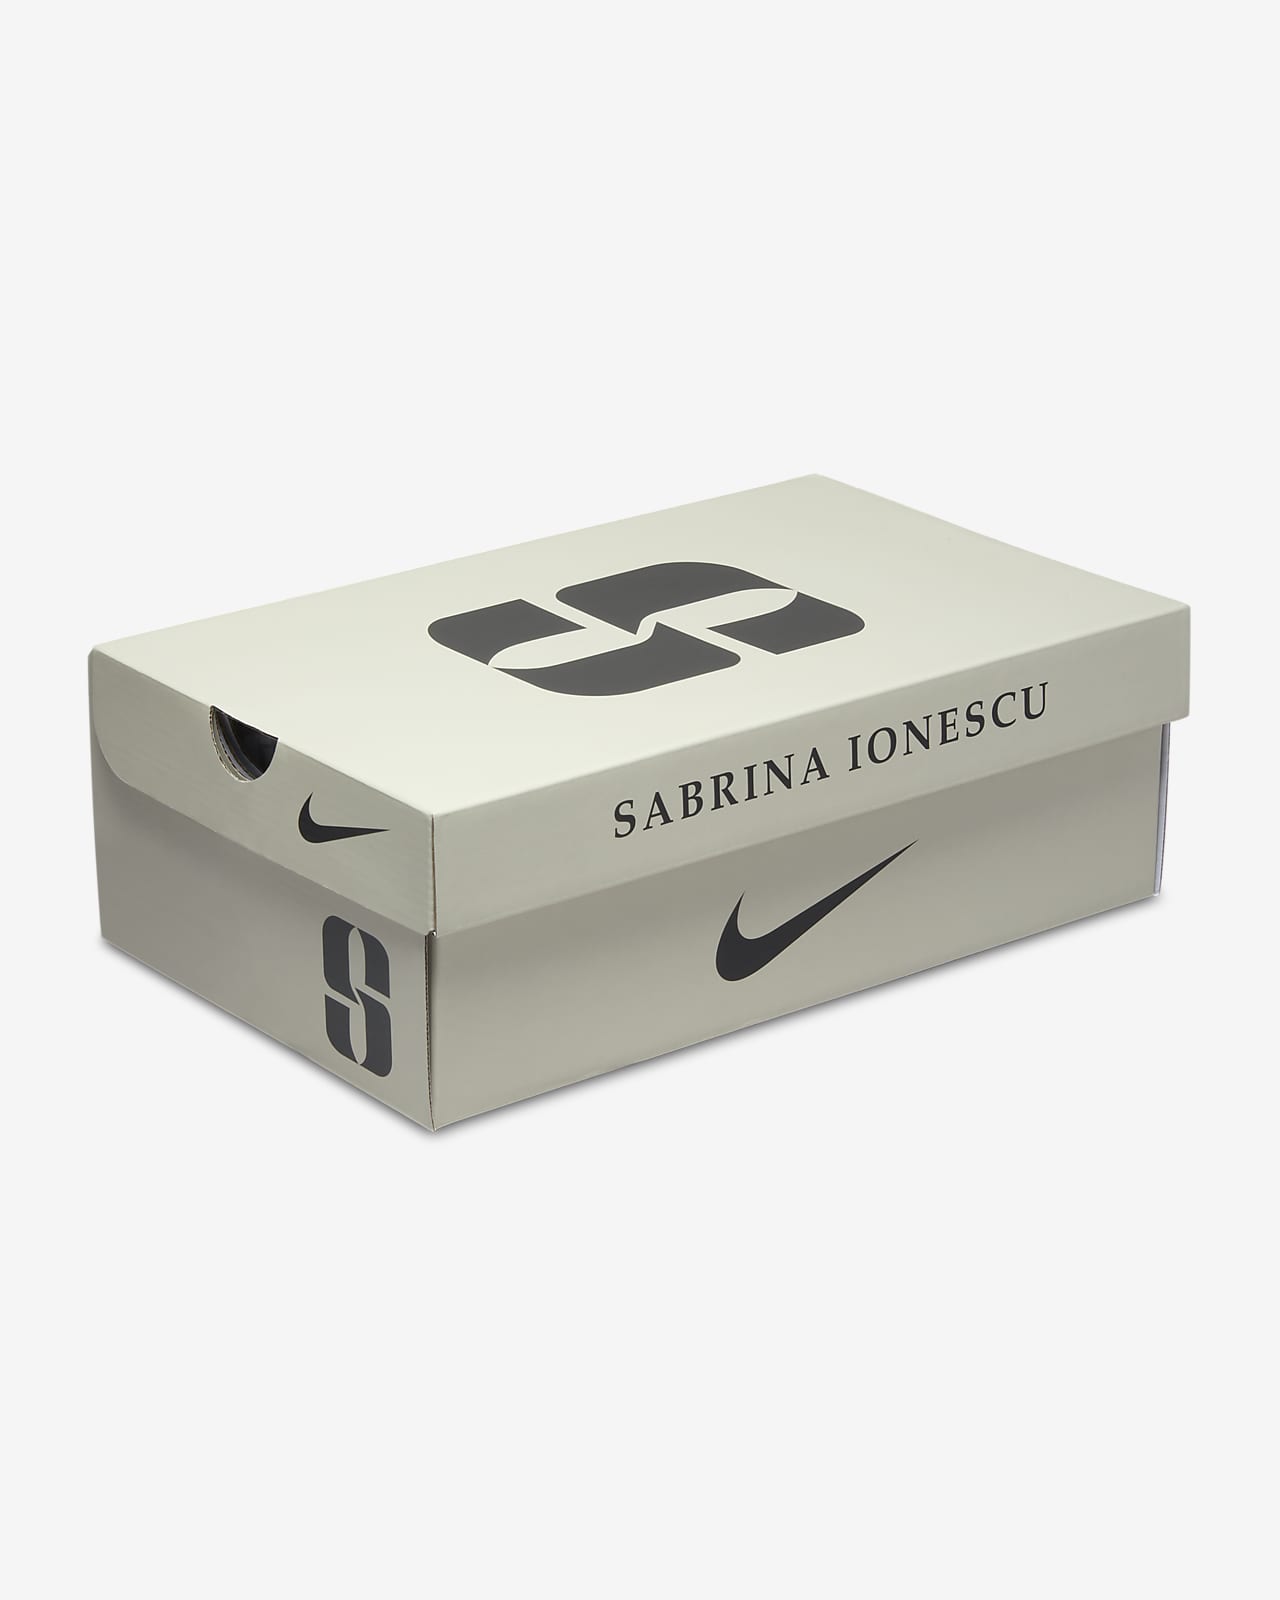 Sabrina 1 (Team) Basketball Shoes.